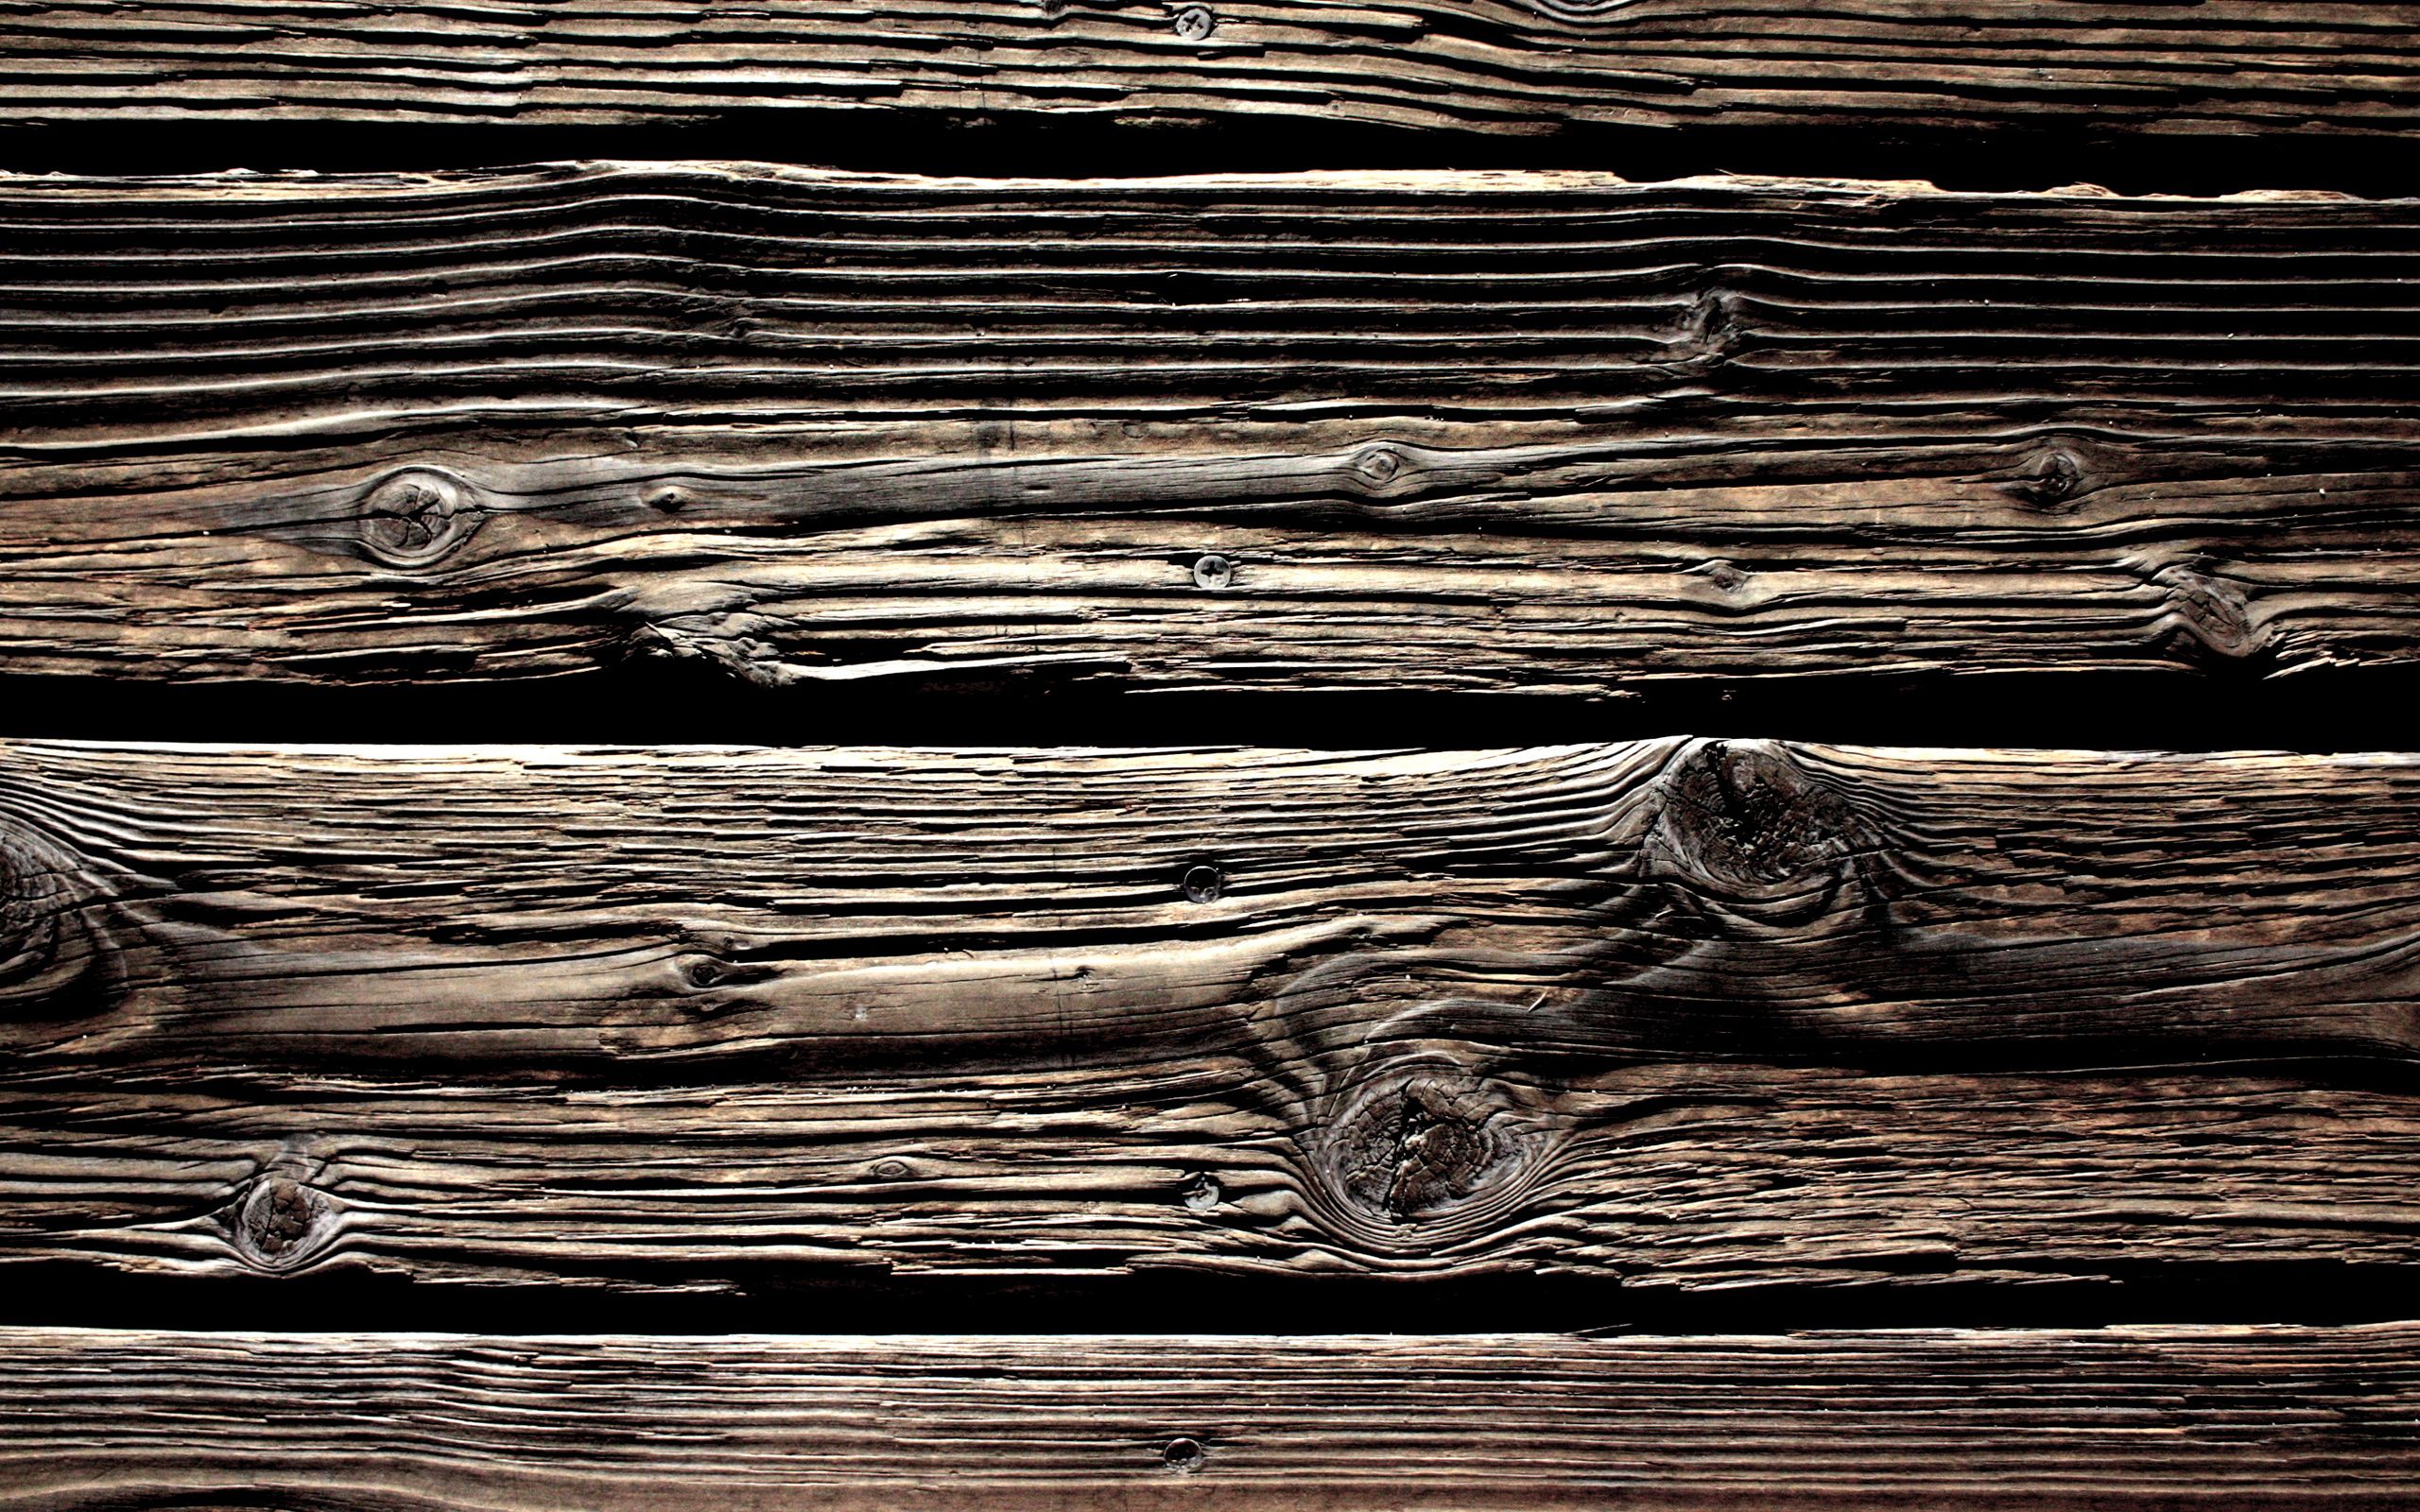 Woodworking Wallpaper. Woodworking Bench Wallpaper, Woodworking Wallpaper and Woodworking Workshop Wallpaper